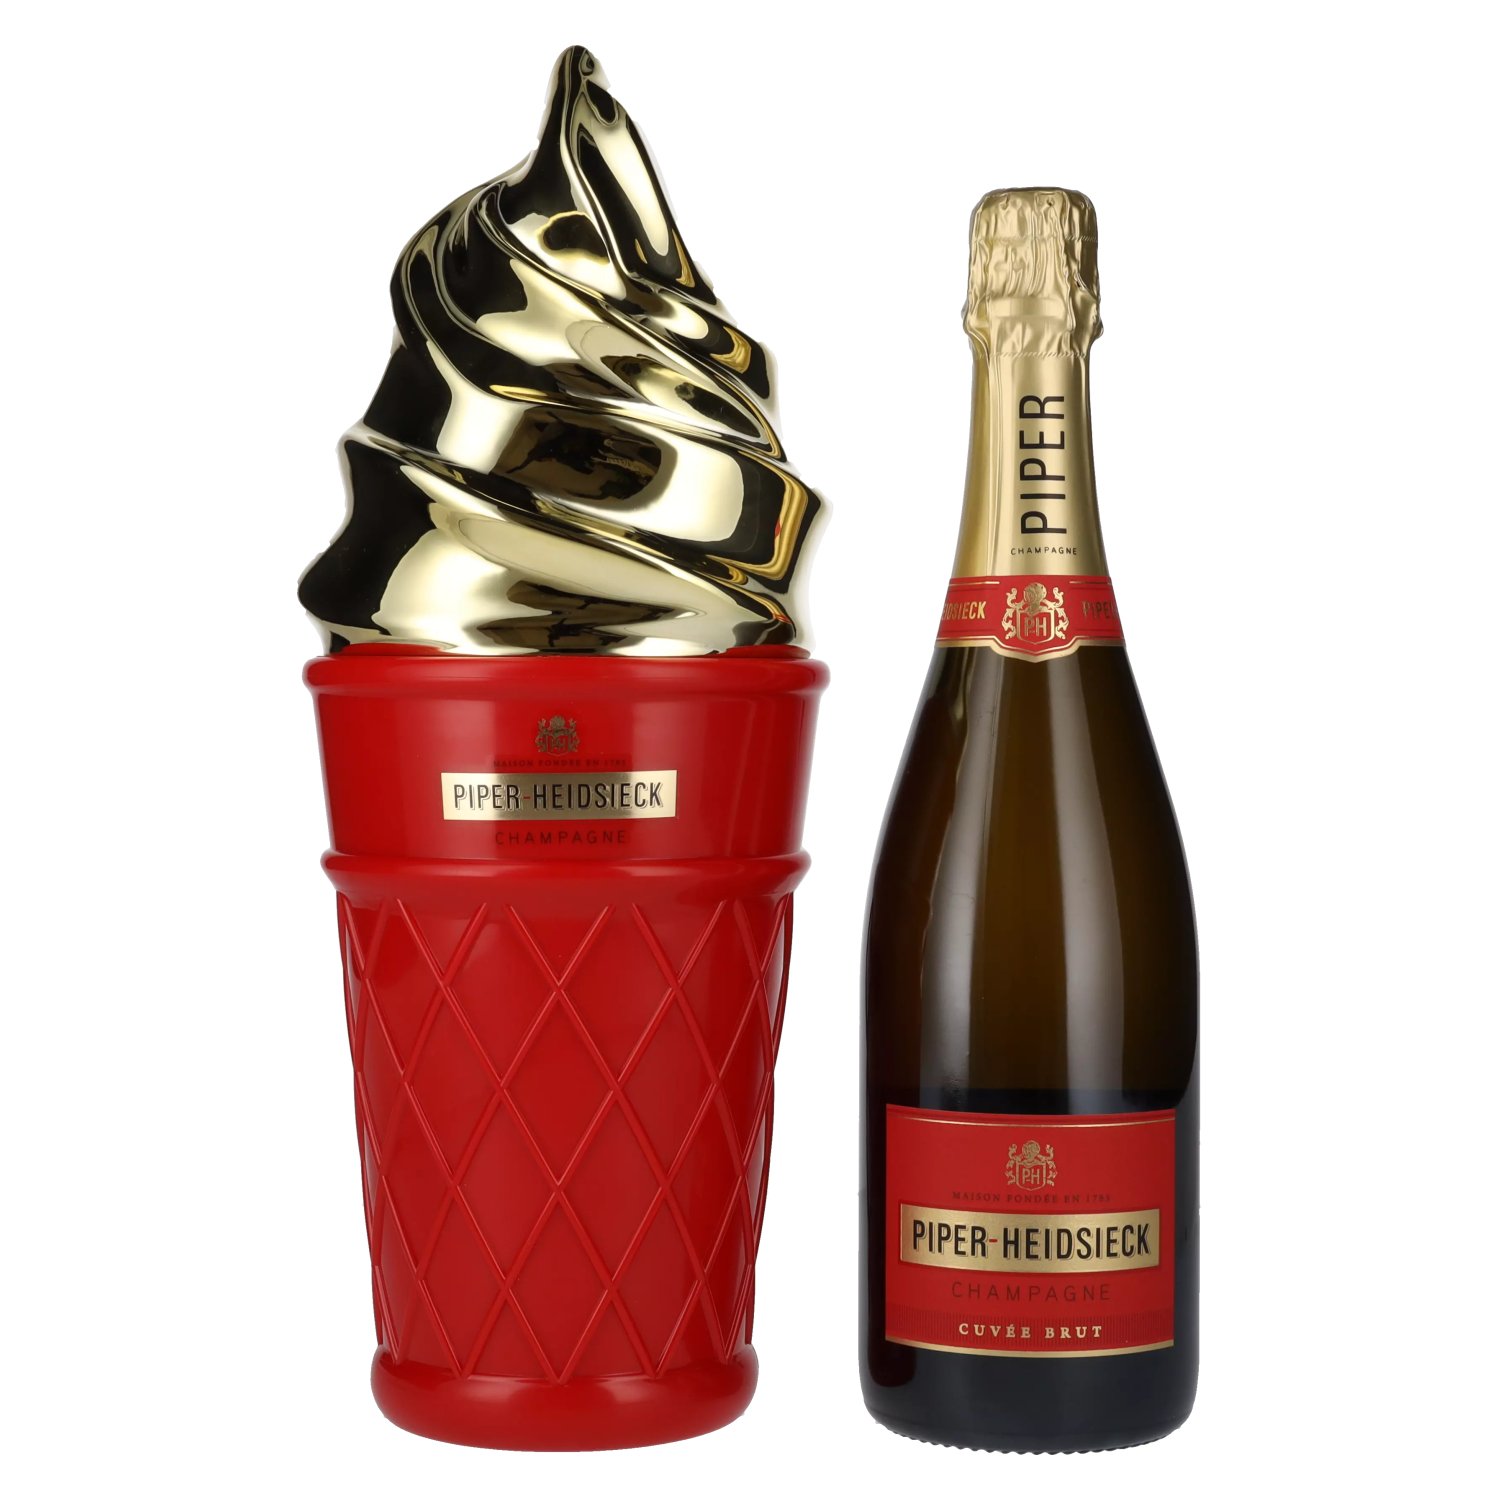 Piper-Heidsieck Champagne CUVÉE BRUT 12% 0,75l Edition Giftbox Cream Ice Vol. in